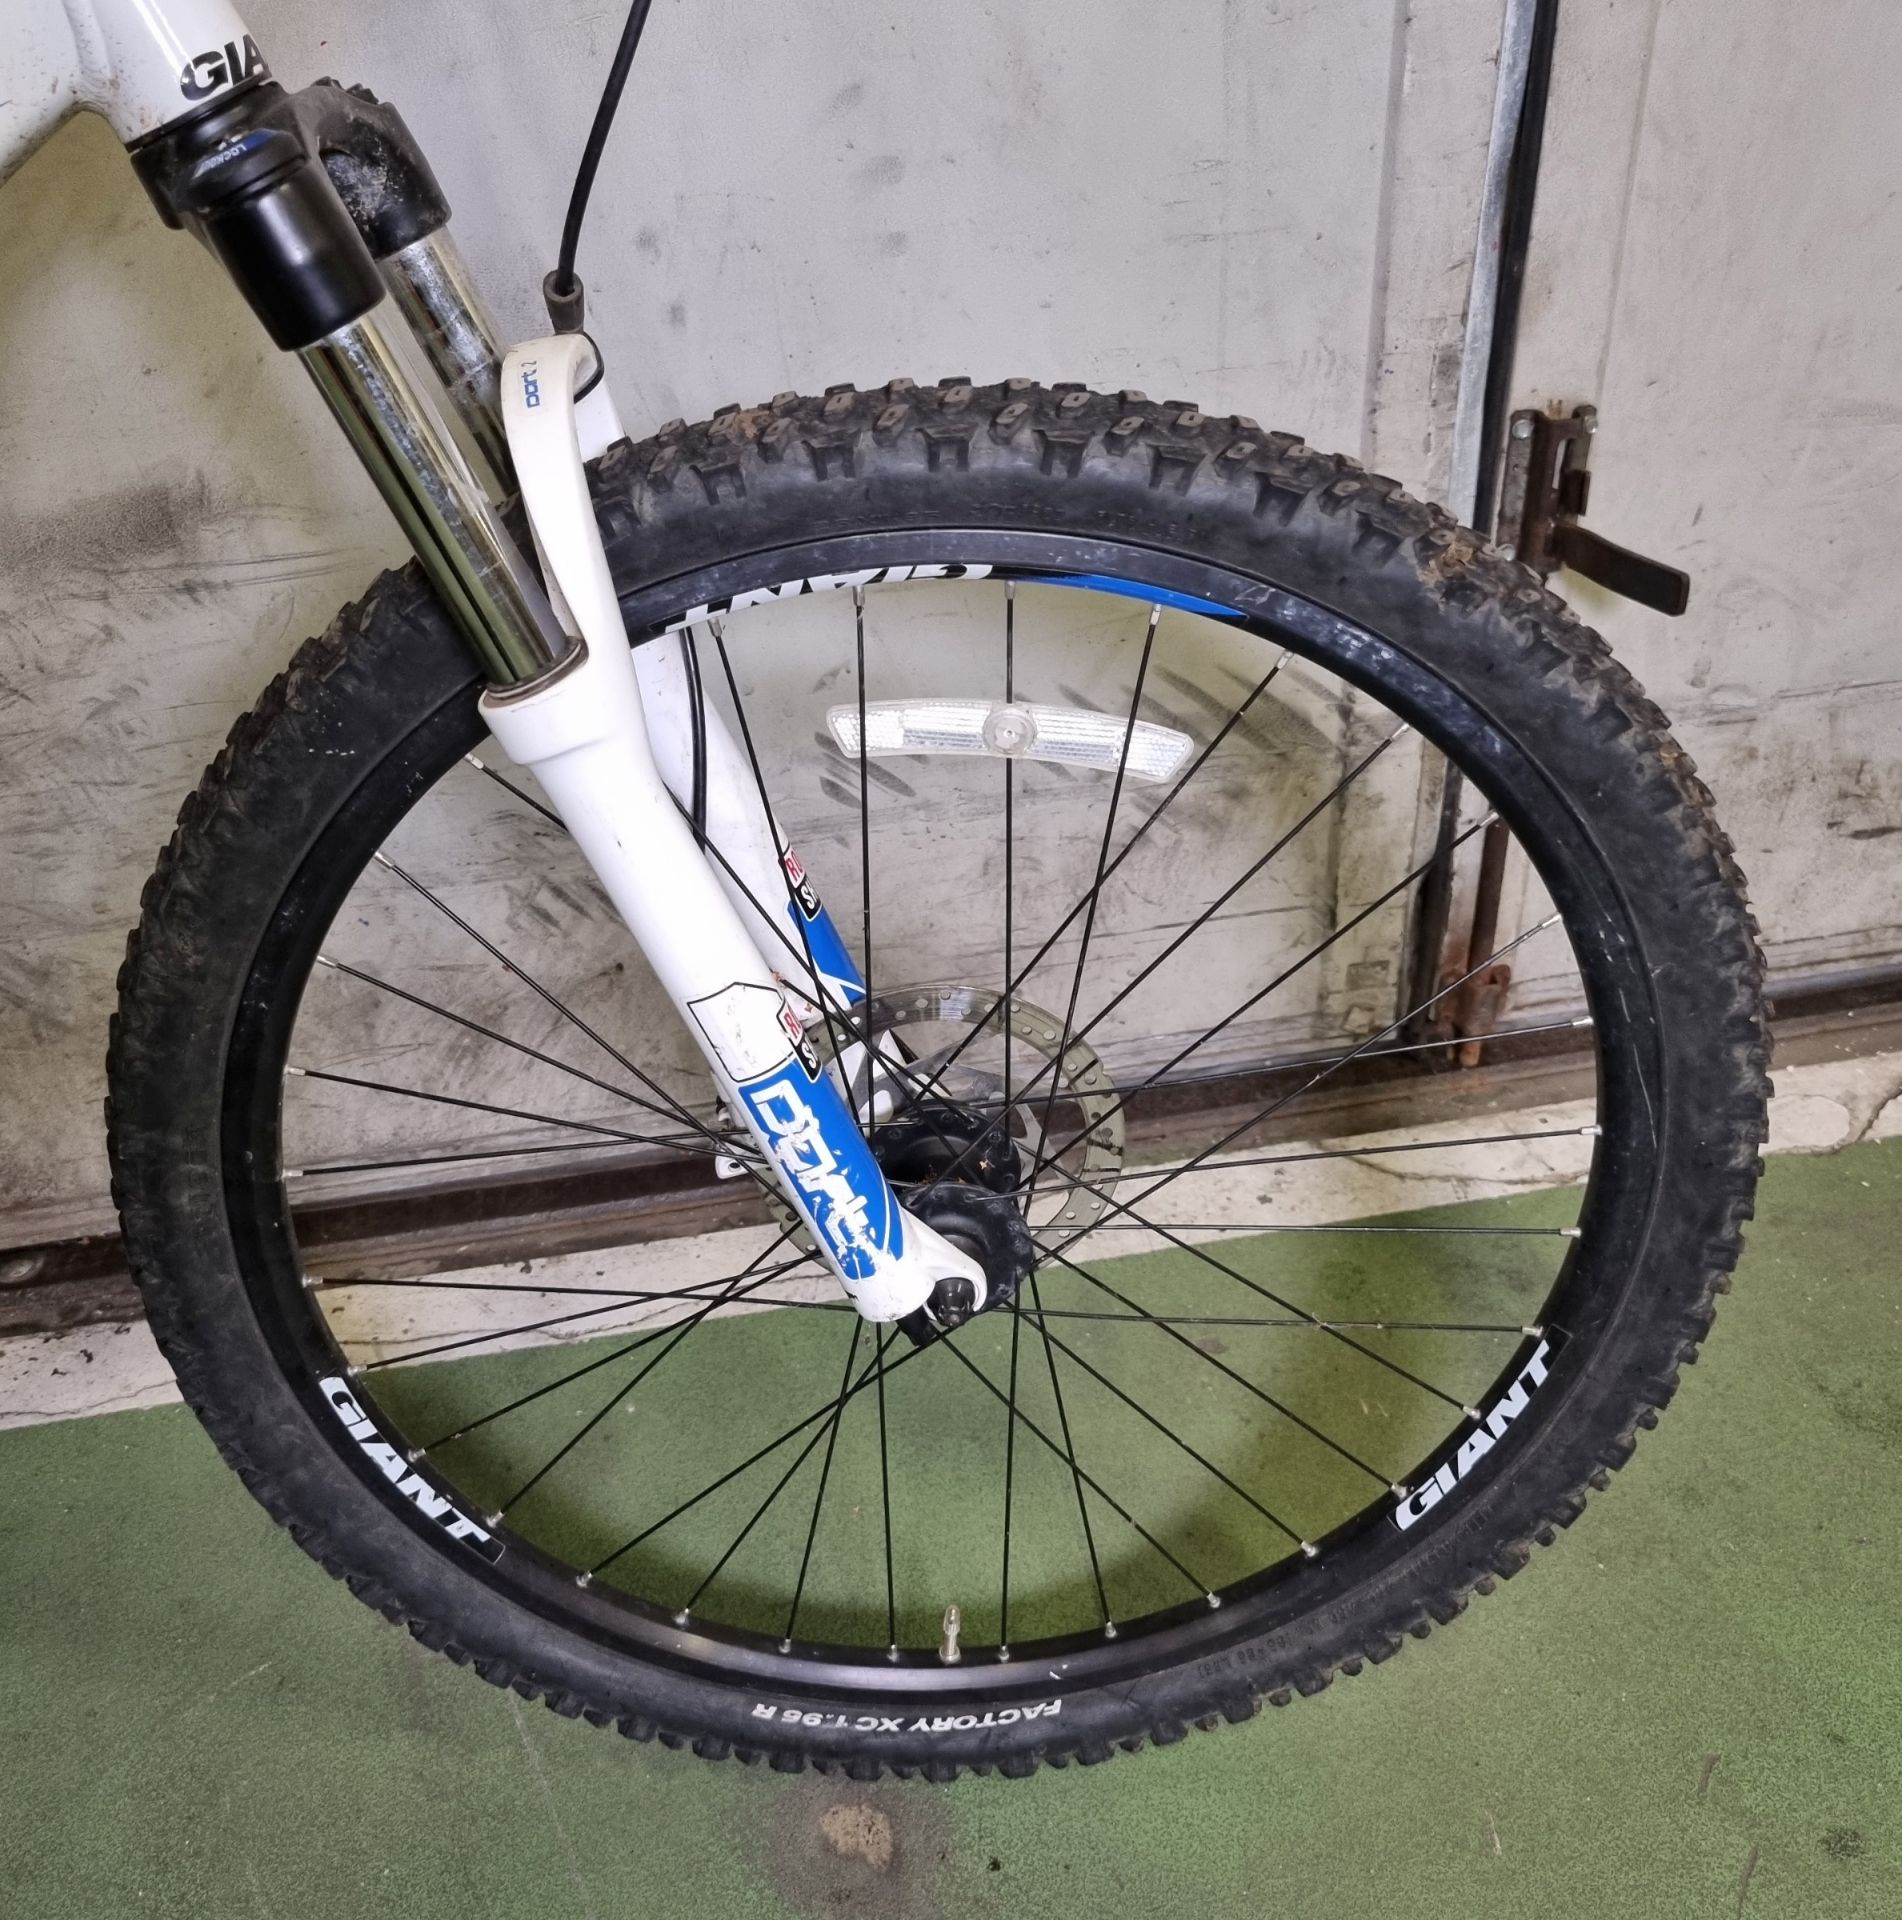 Giant Talon hardtail mountain bike - large frame size - 26 inch wheels - 3x8 Shimano drivetrain - Image 7 of 8